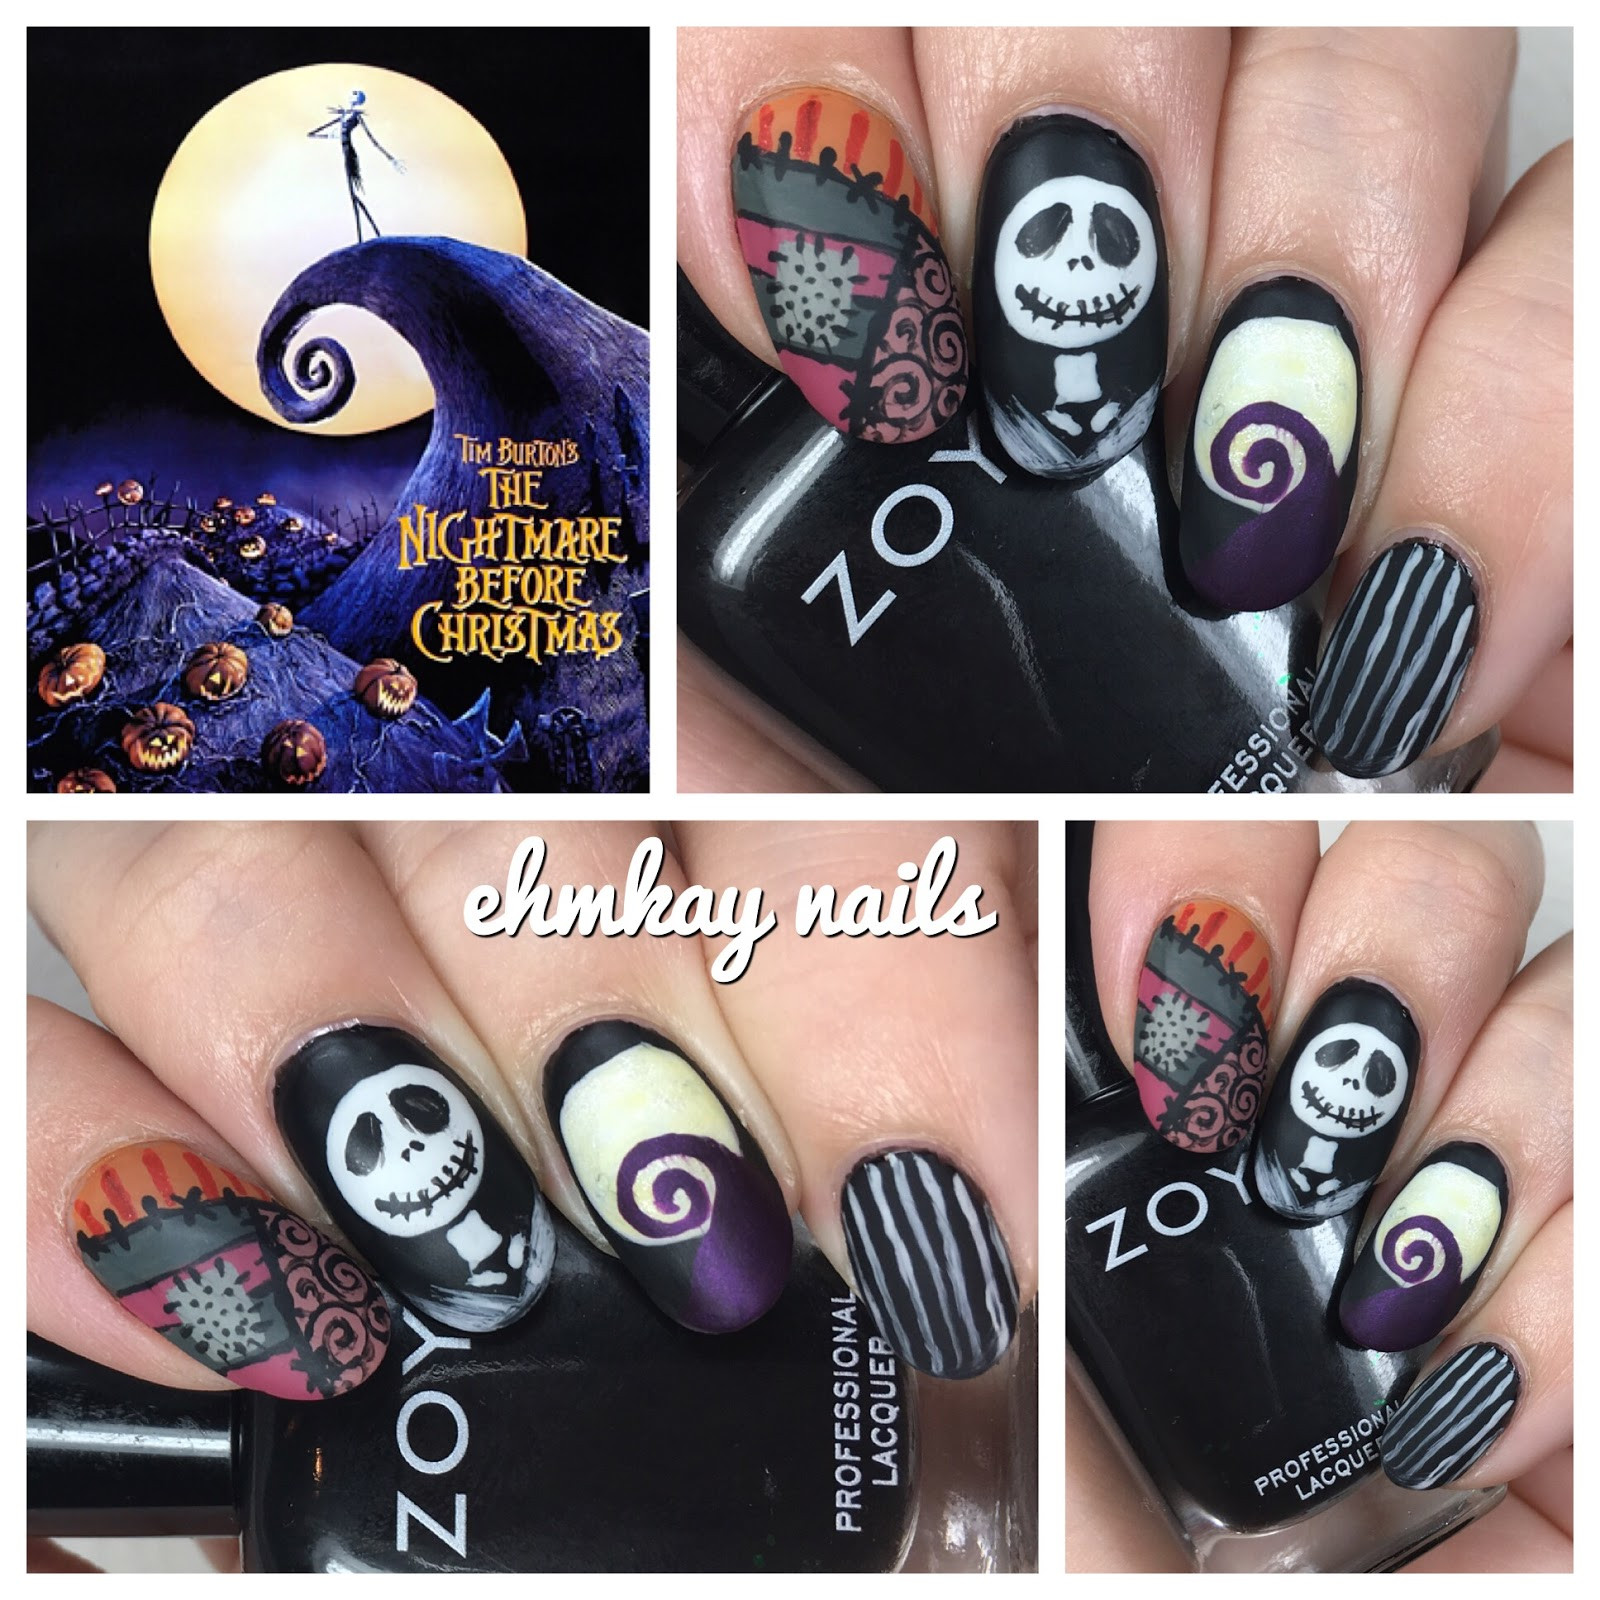 Nightmare Before Christmas Nail Designs
 ehmkay nails 13 Days of Halloween Nail Art Nightmare